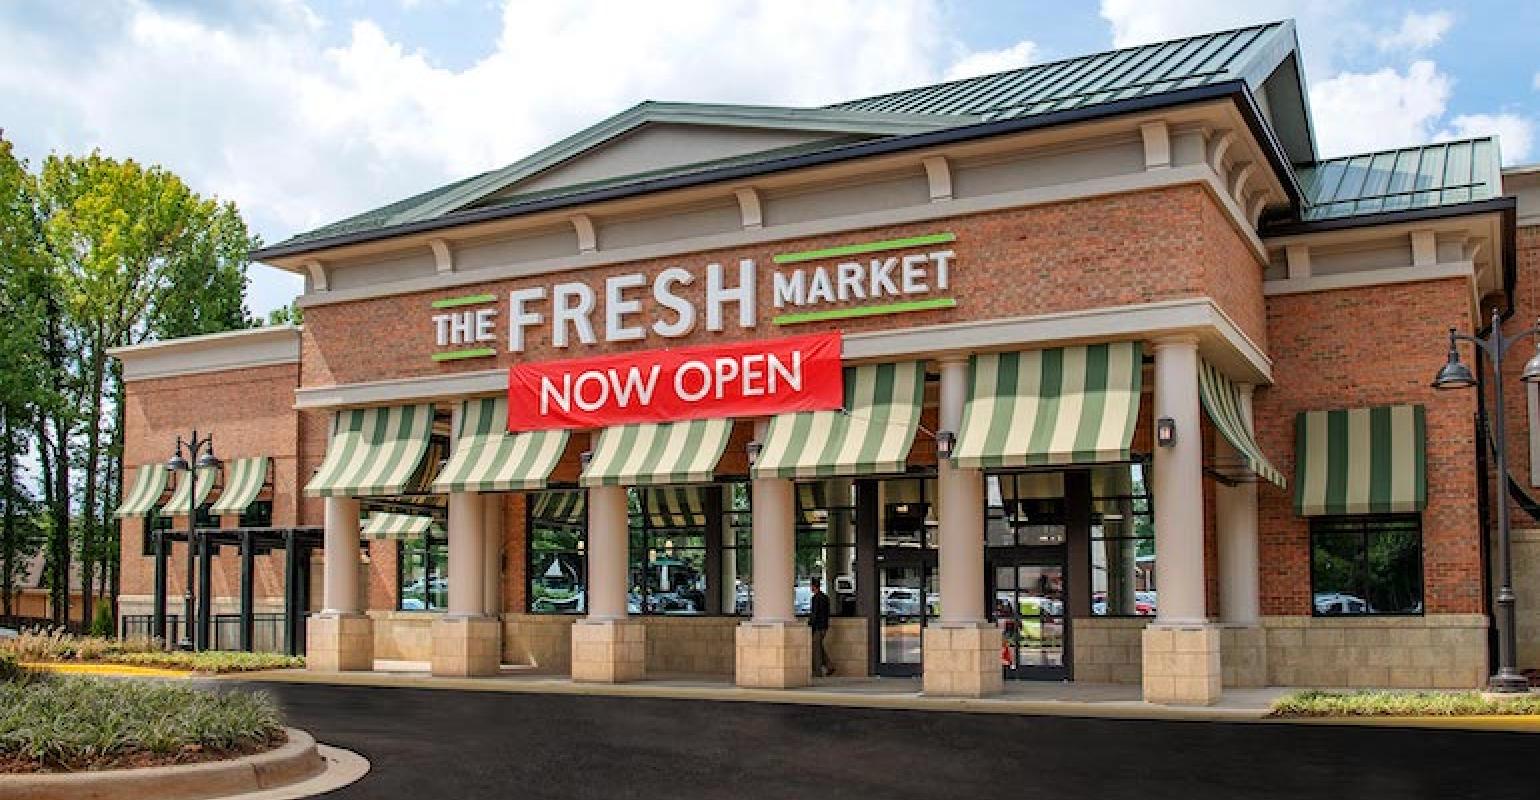 The Fresh Market to shut 15 stores